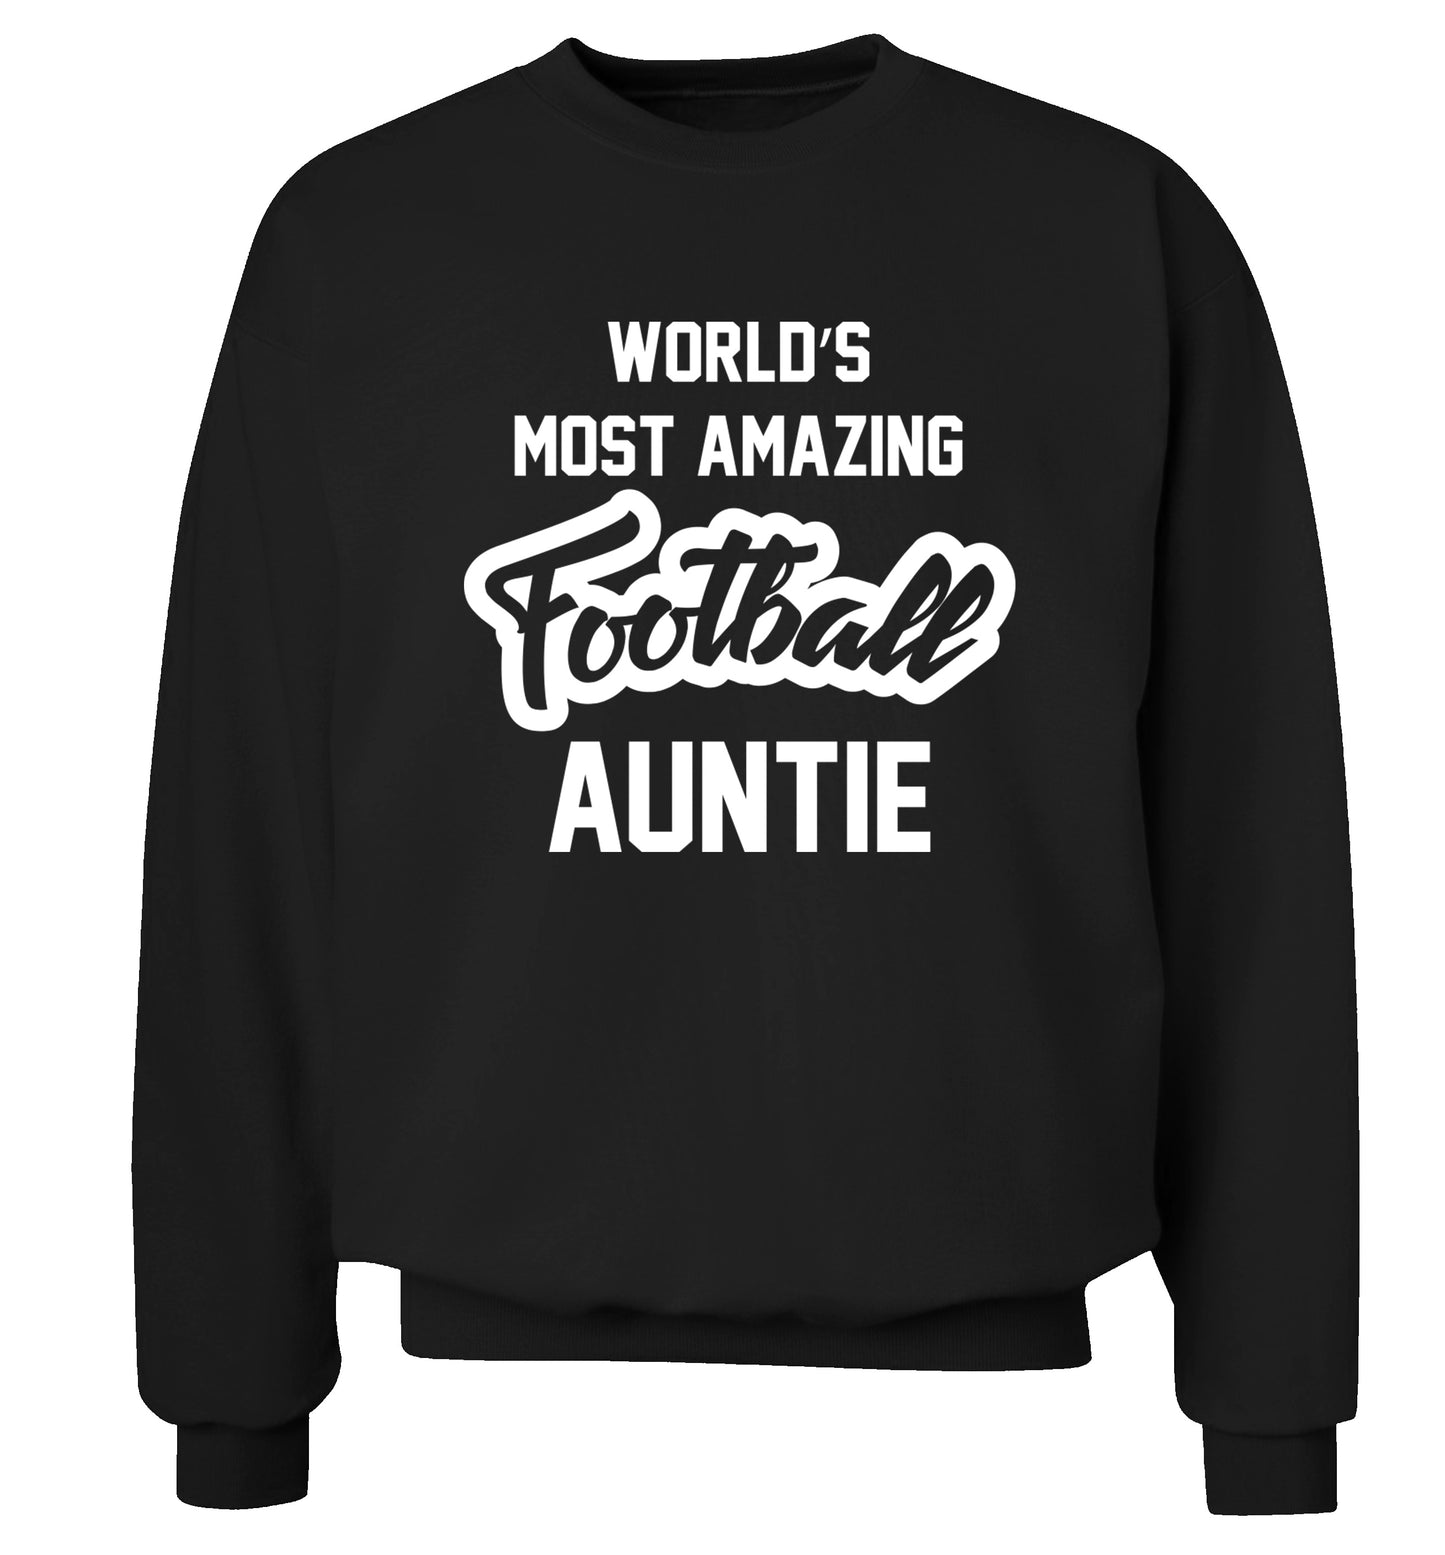 Worlds most amazing football auntie Adult's unisexblack Sweater 2XL